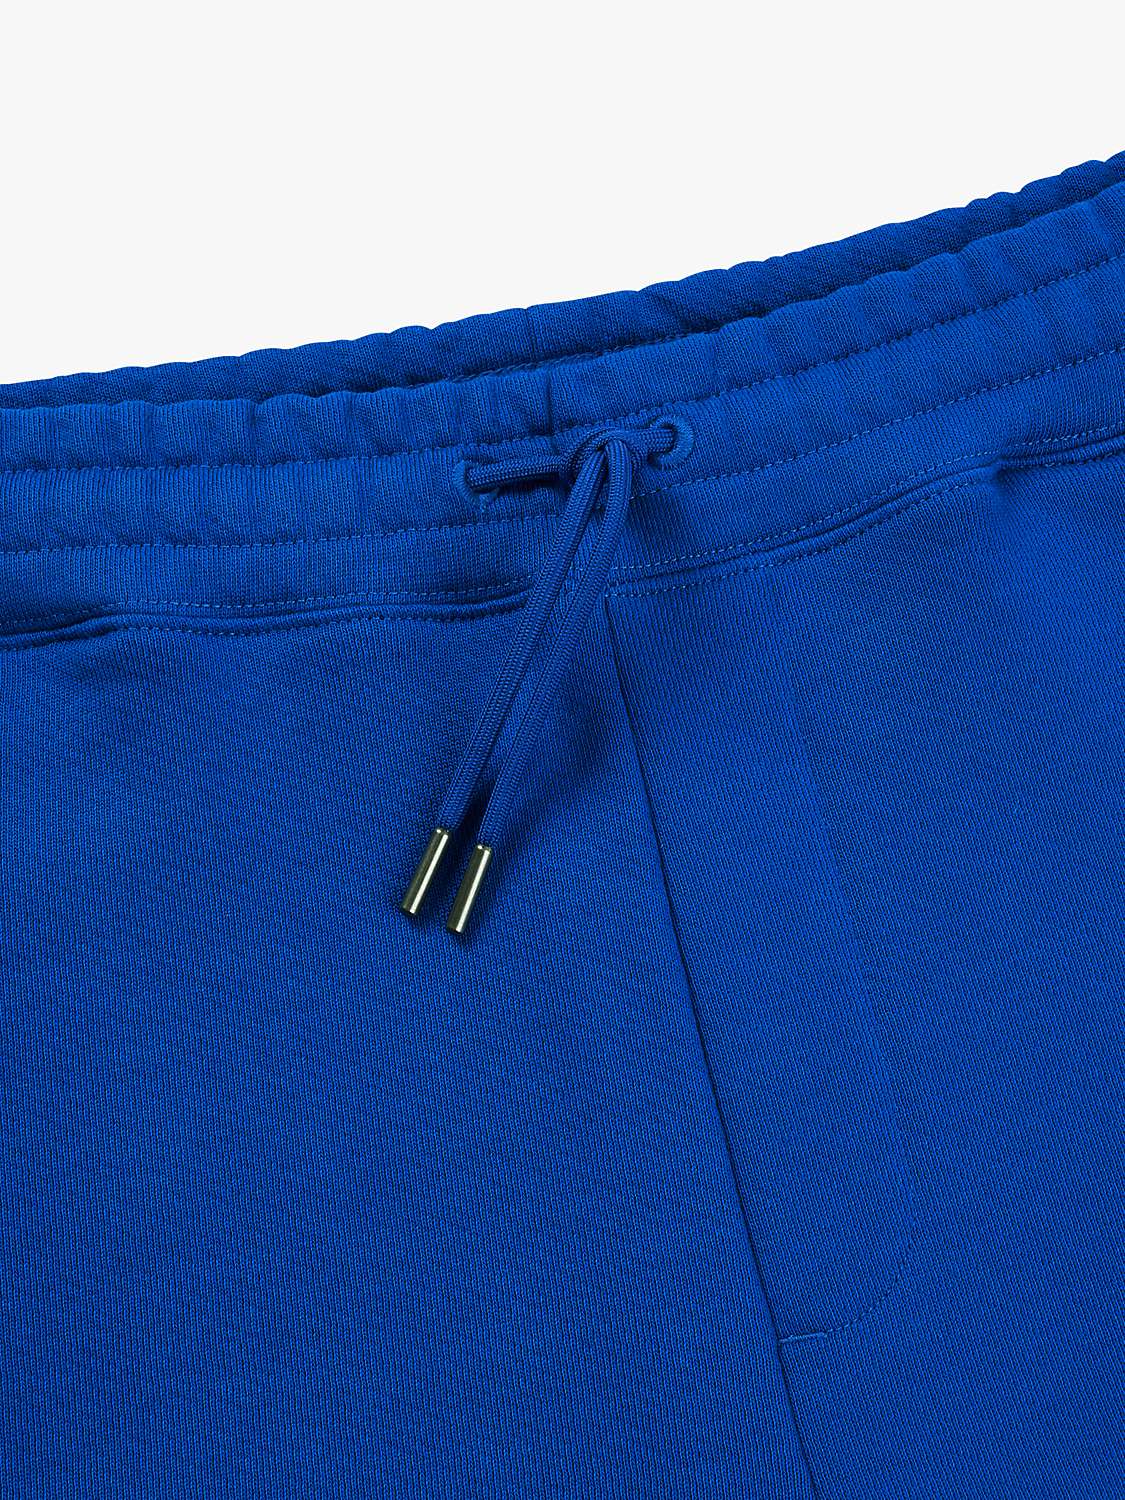 Buy HUGO Nomario Cotton Logo Shorts, Open Blue Online at johnlewis.com